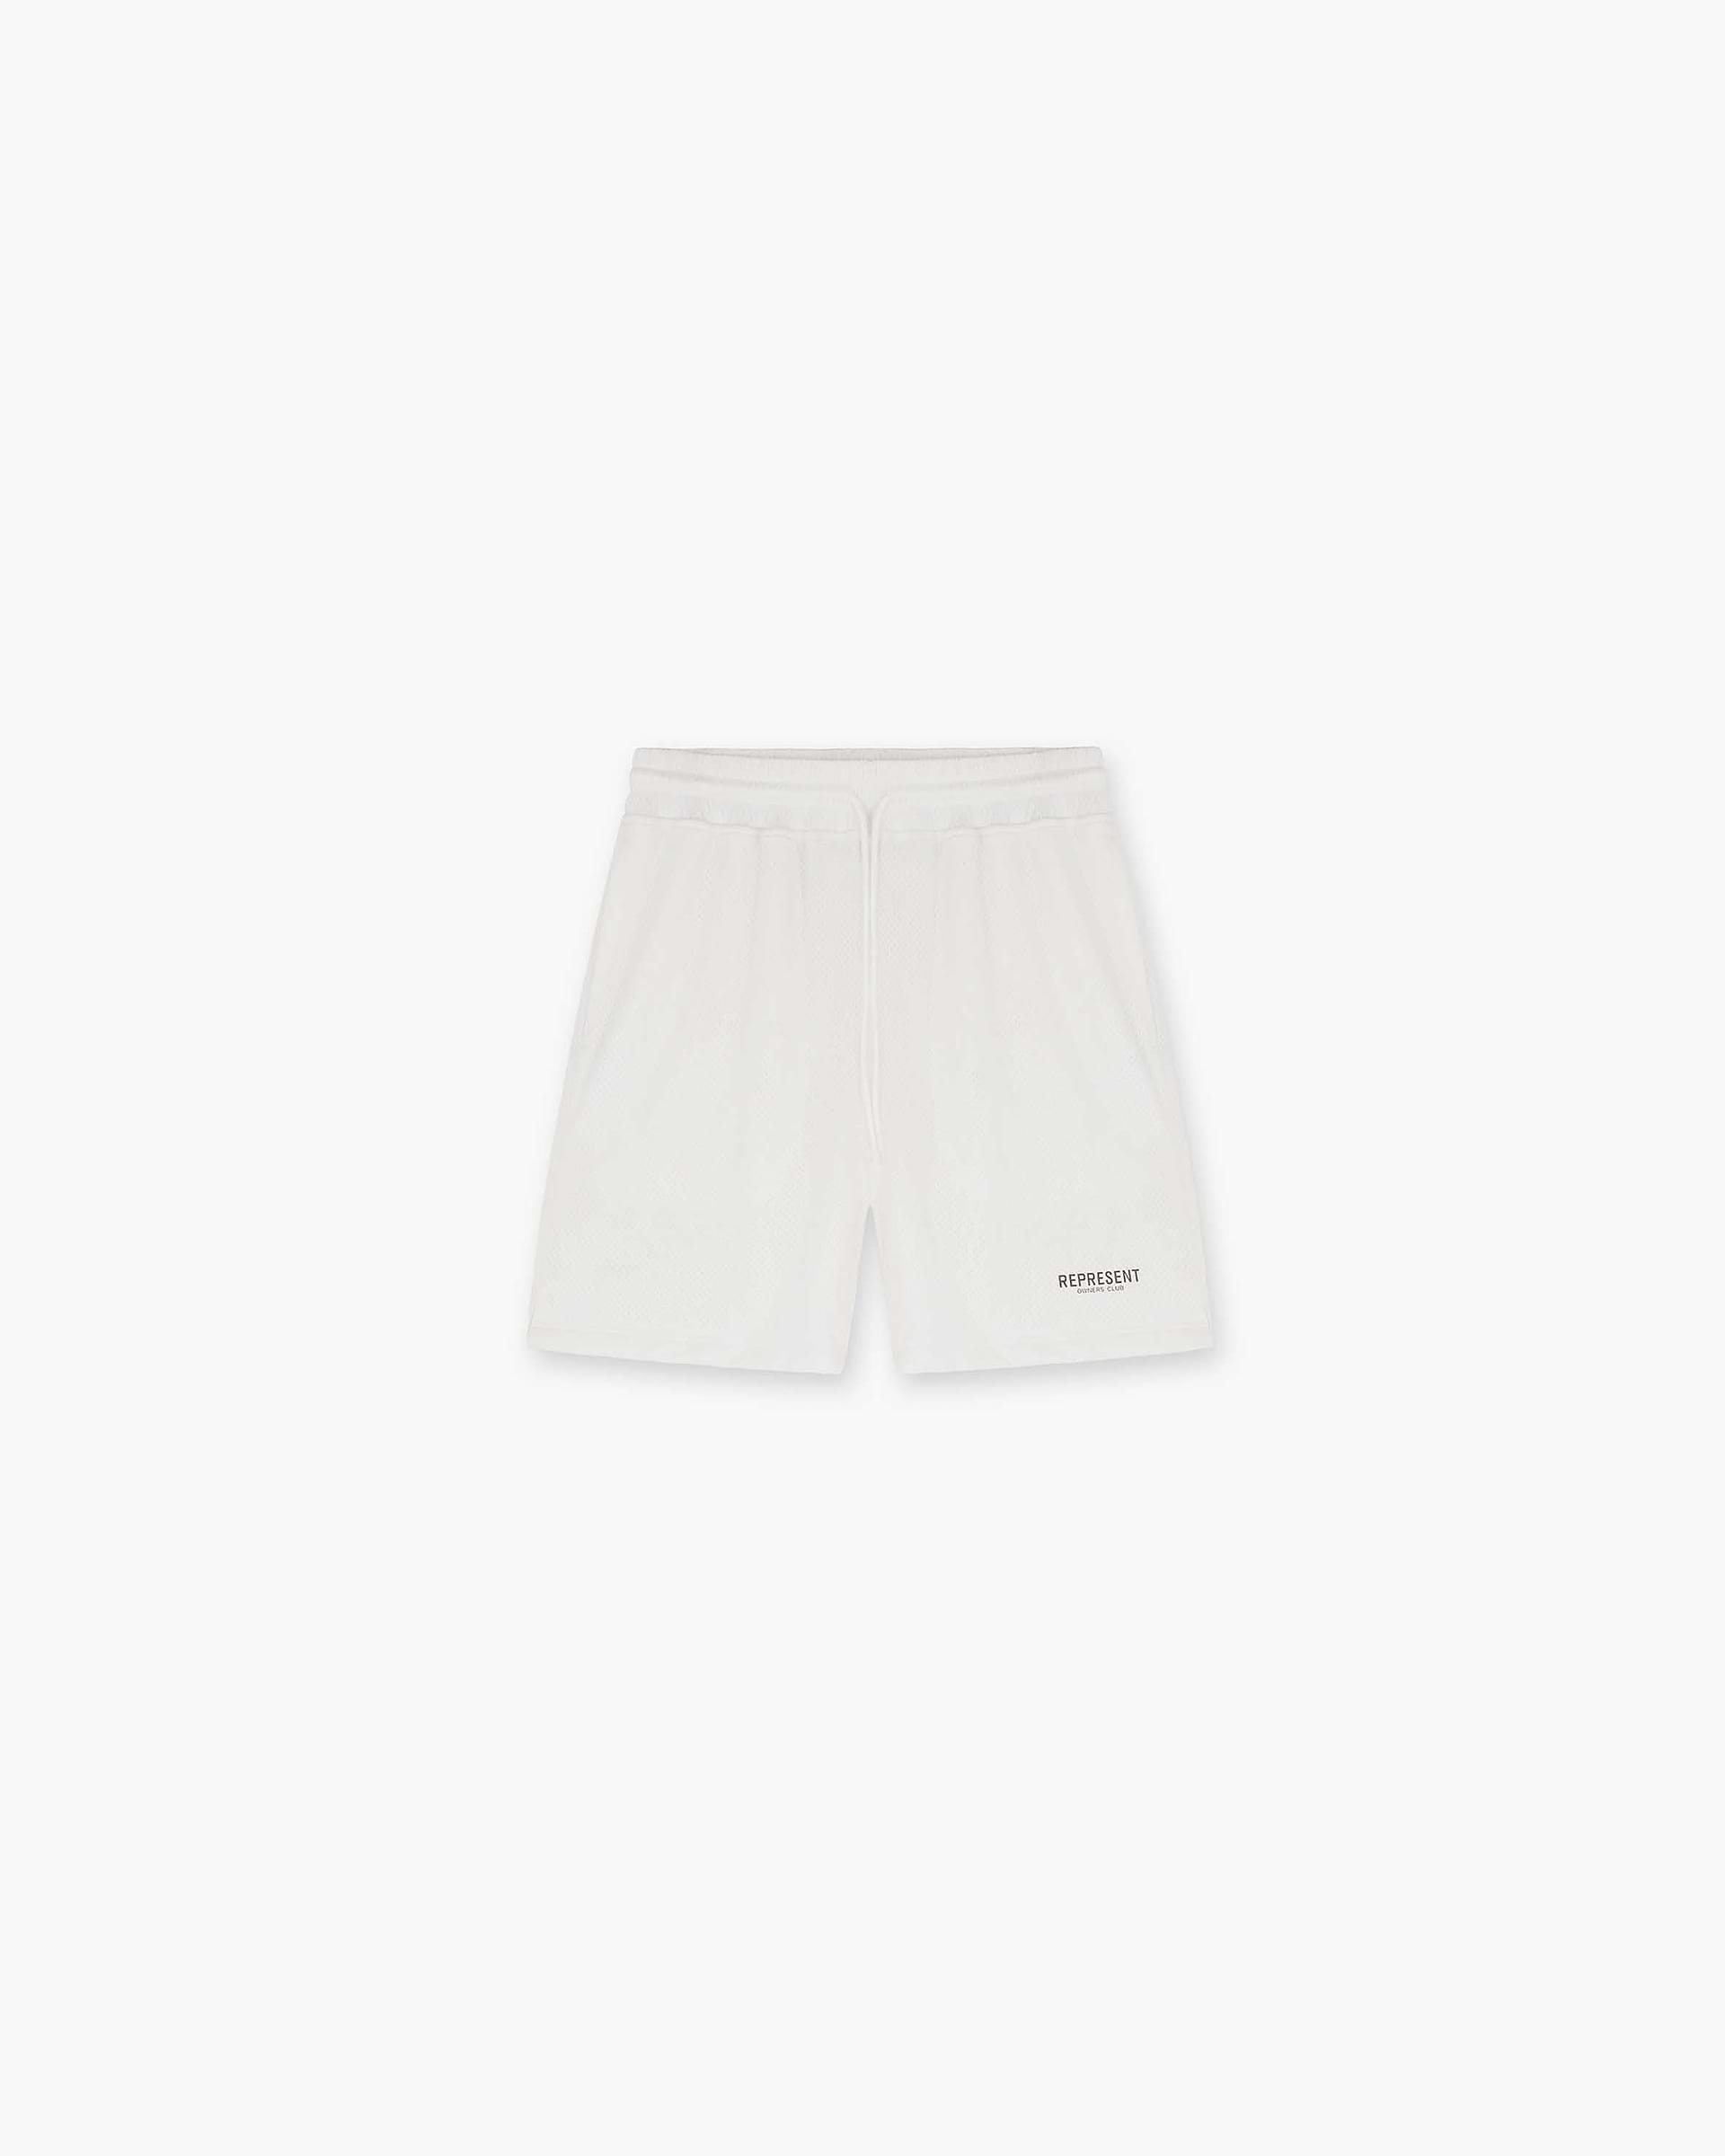 Represent Owners Club Mesh Shorts | Flat White Shorts Owners Club | Represent Clo